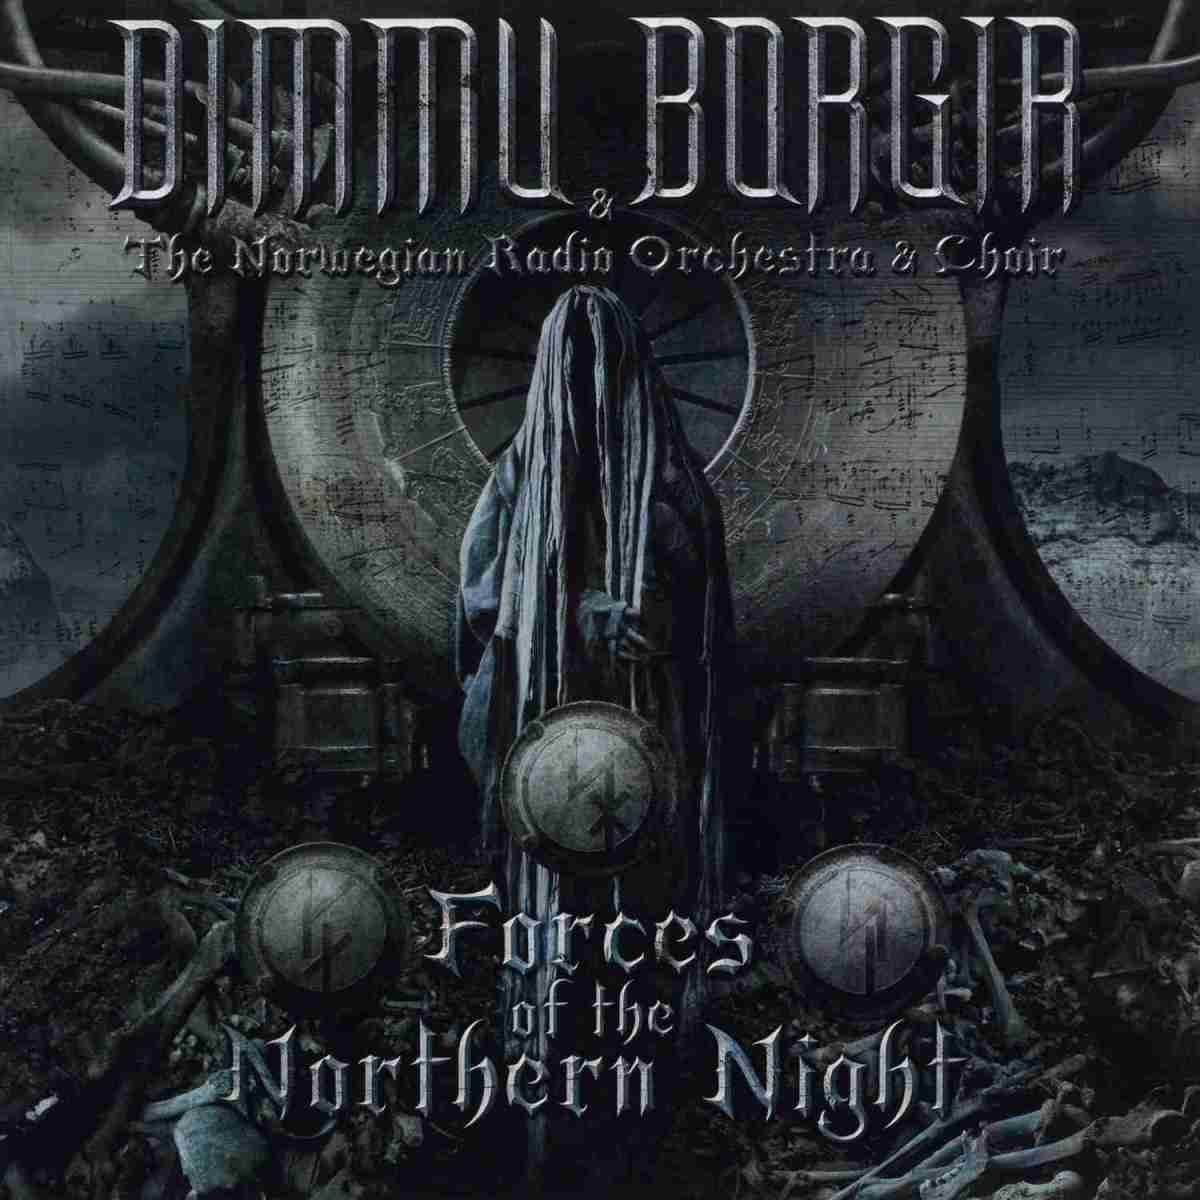 Schallplatte Dimmu Borgir & The Norwegian Radio Orchestra & Choir - Forces of the Northern Night (Nuclear Blast) im Test, Bild 2